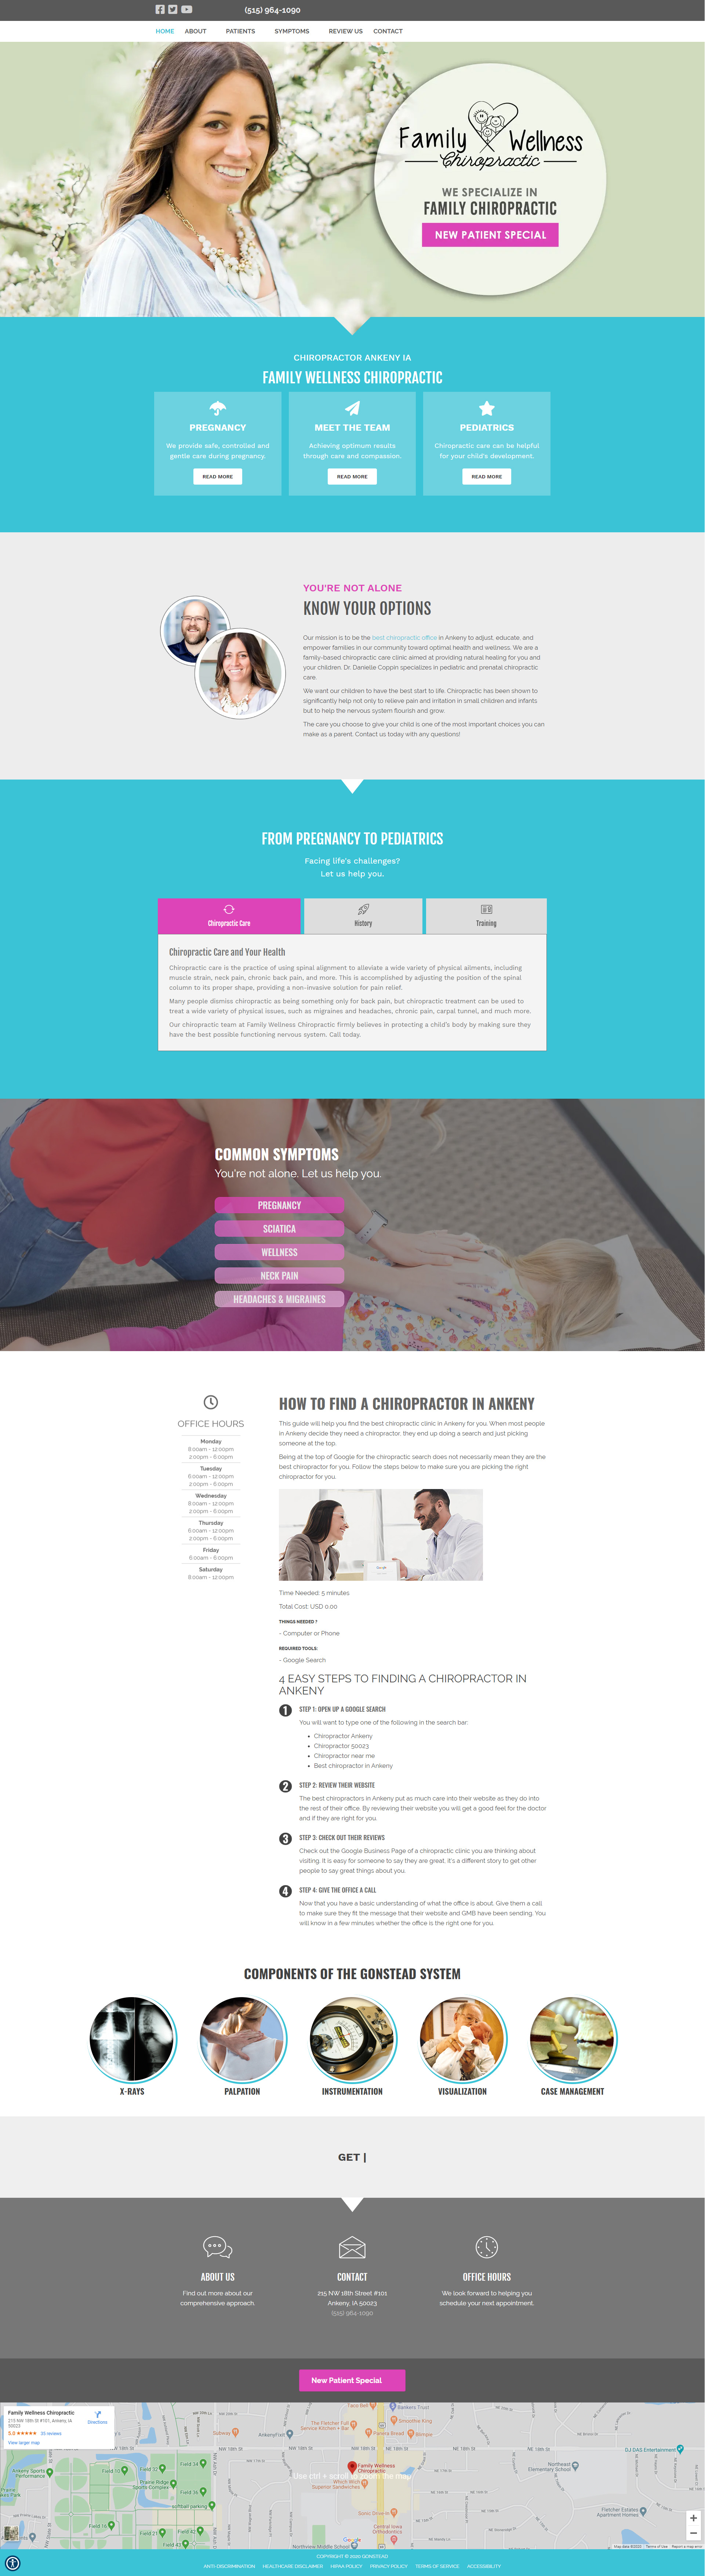 Previous Healthcare Provider Website Design Sample